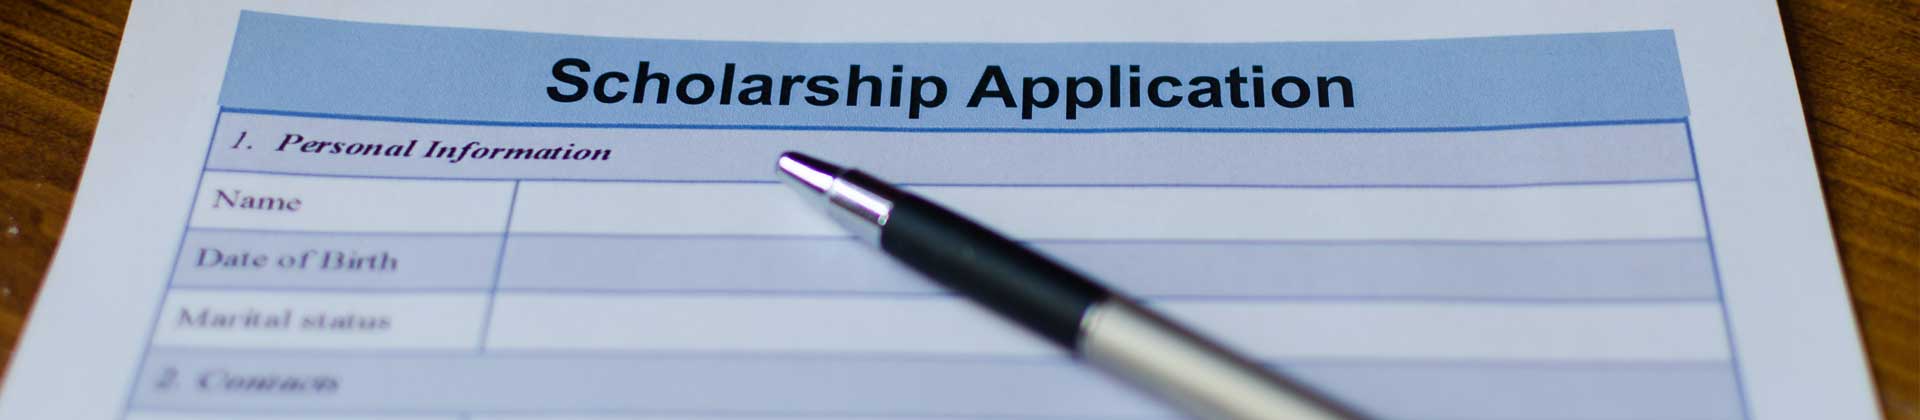 Scholarship applicattion form